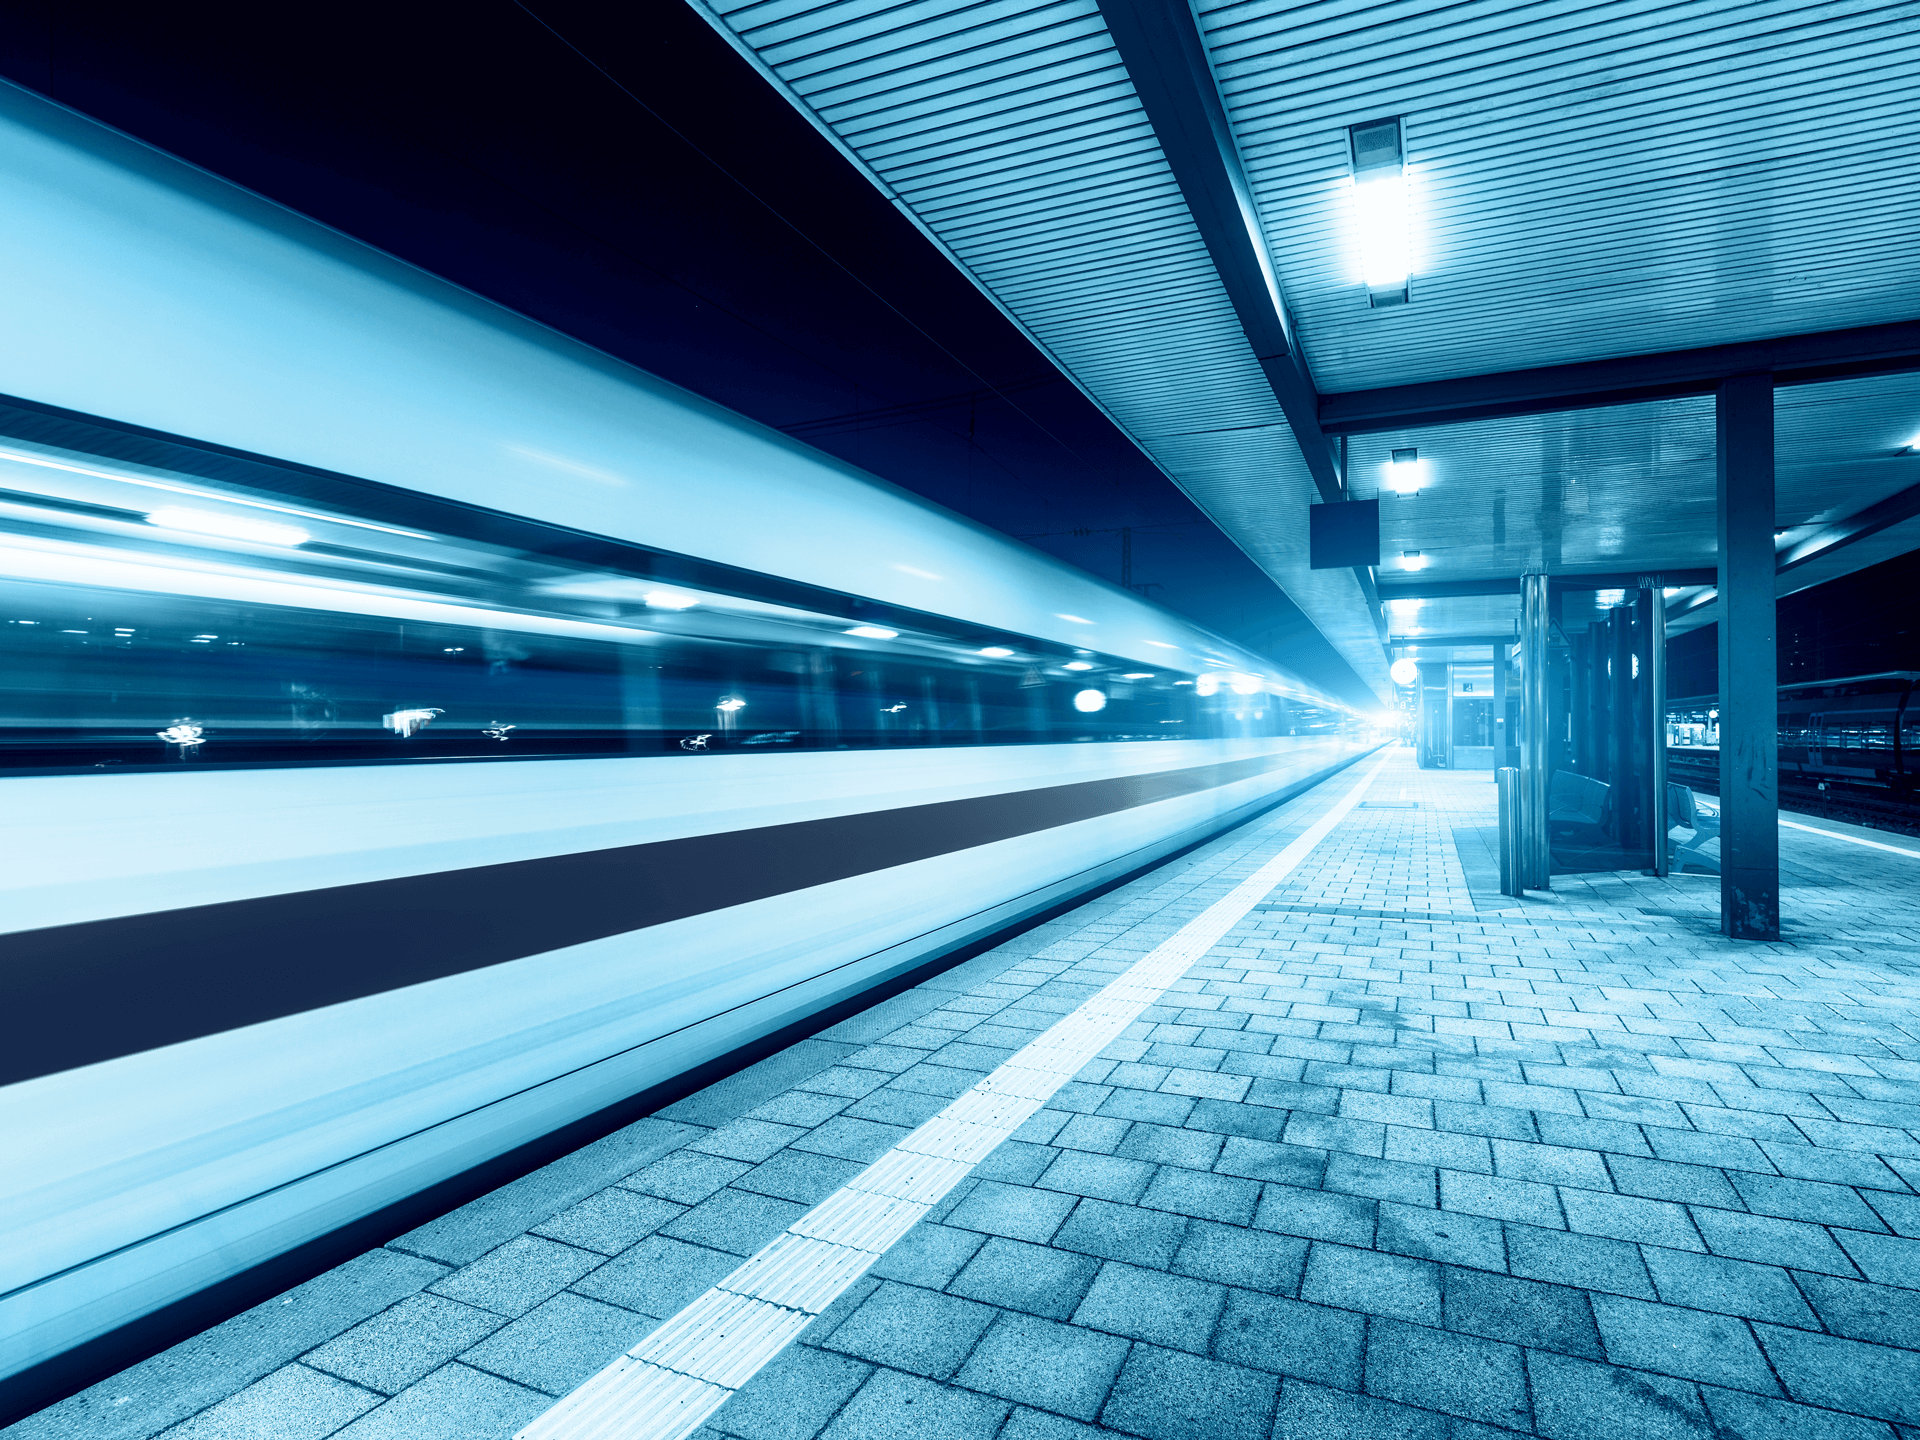 Train platform